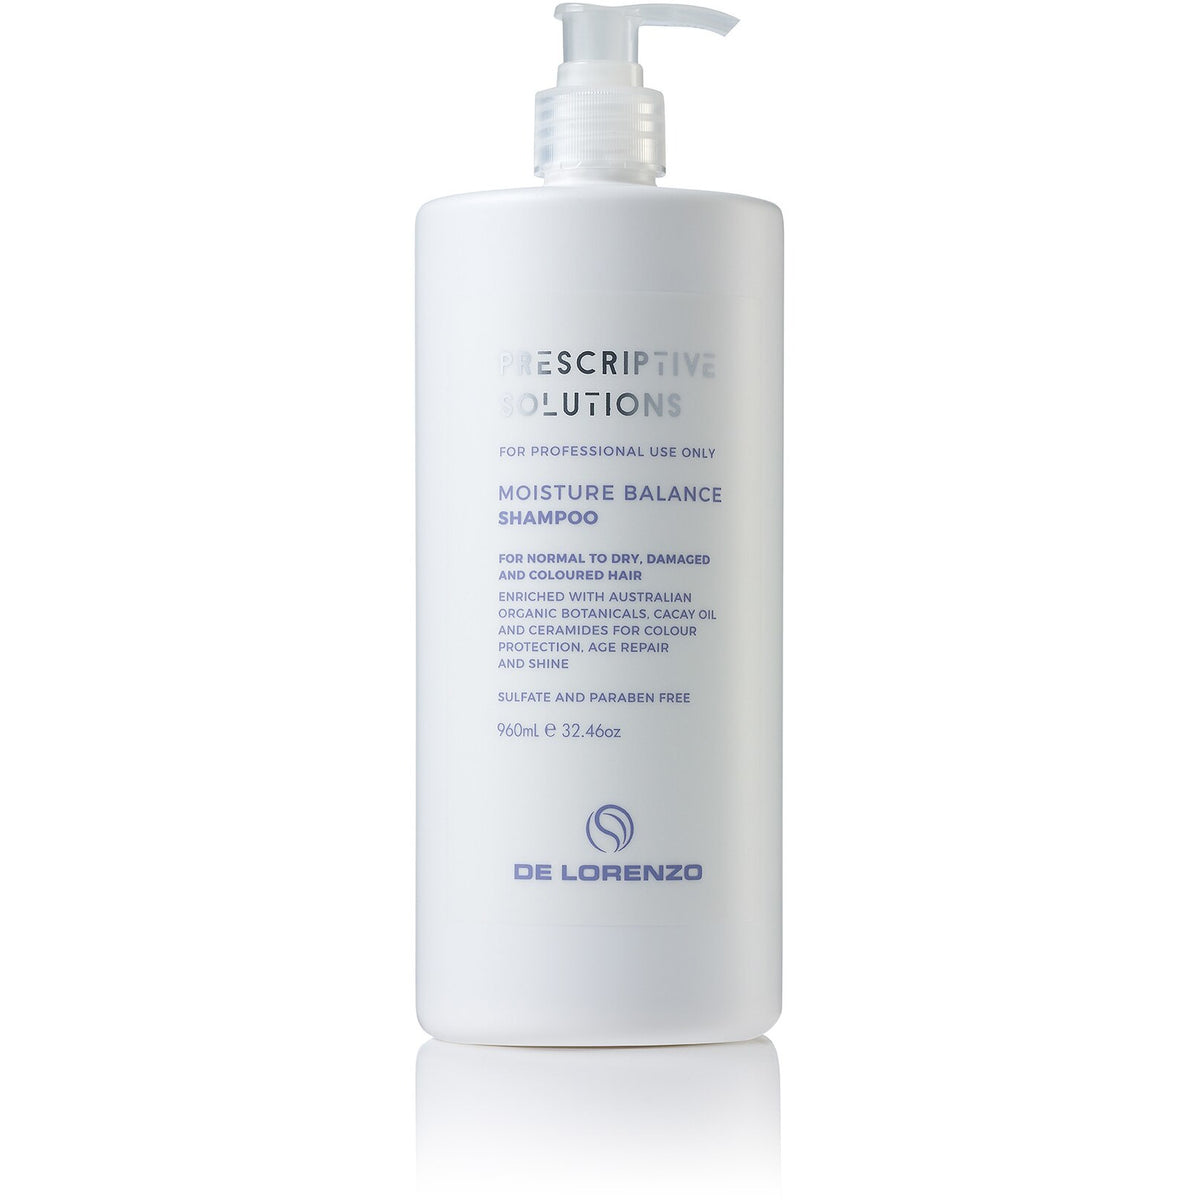 De Lorenzo Prescriptive Solutions - Moisture Balance Shampoo